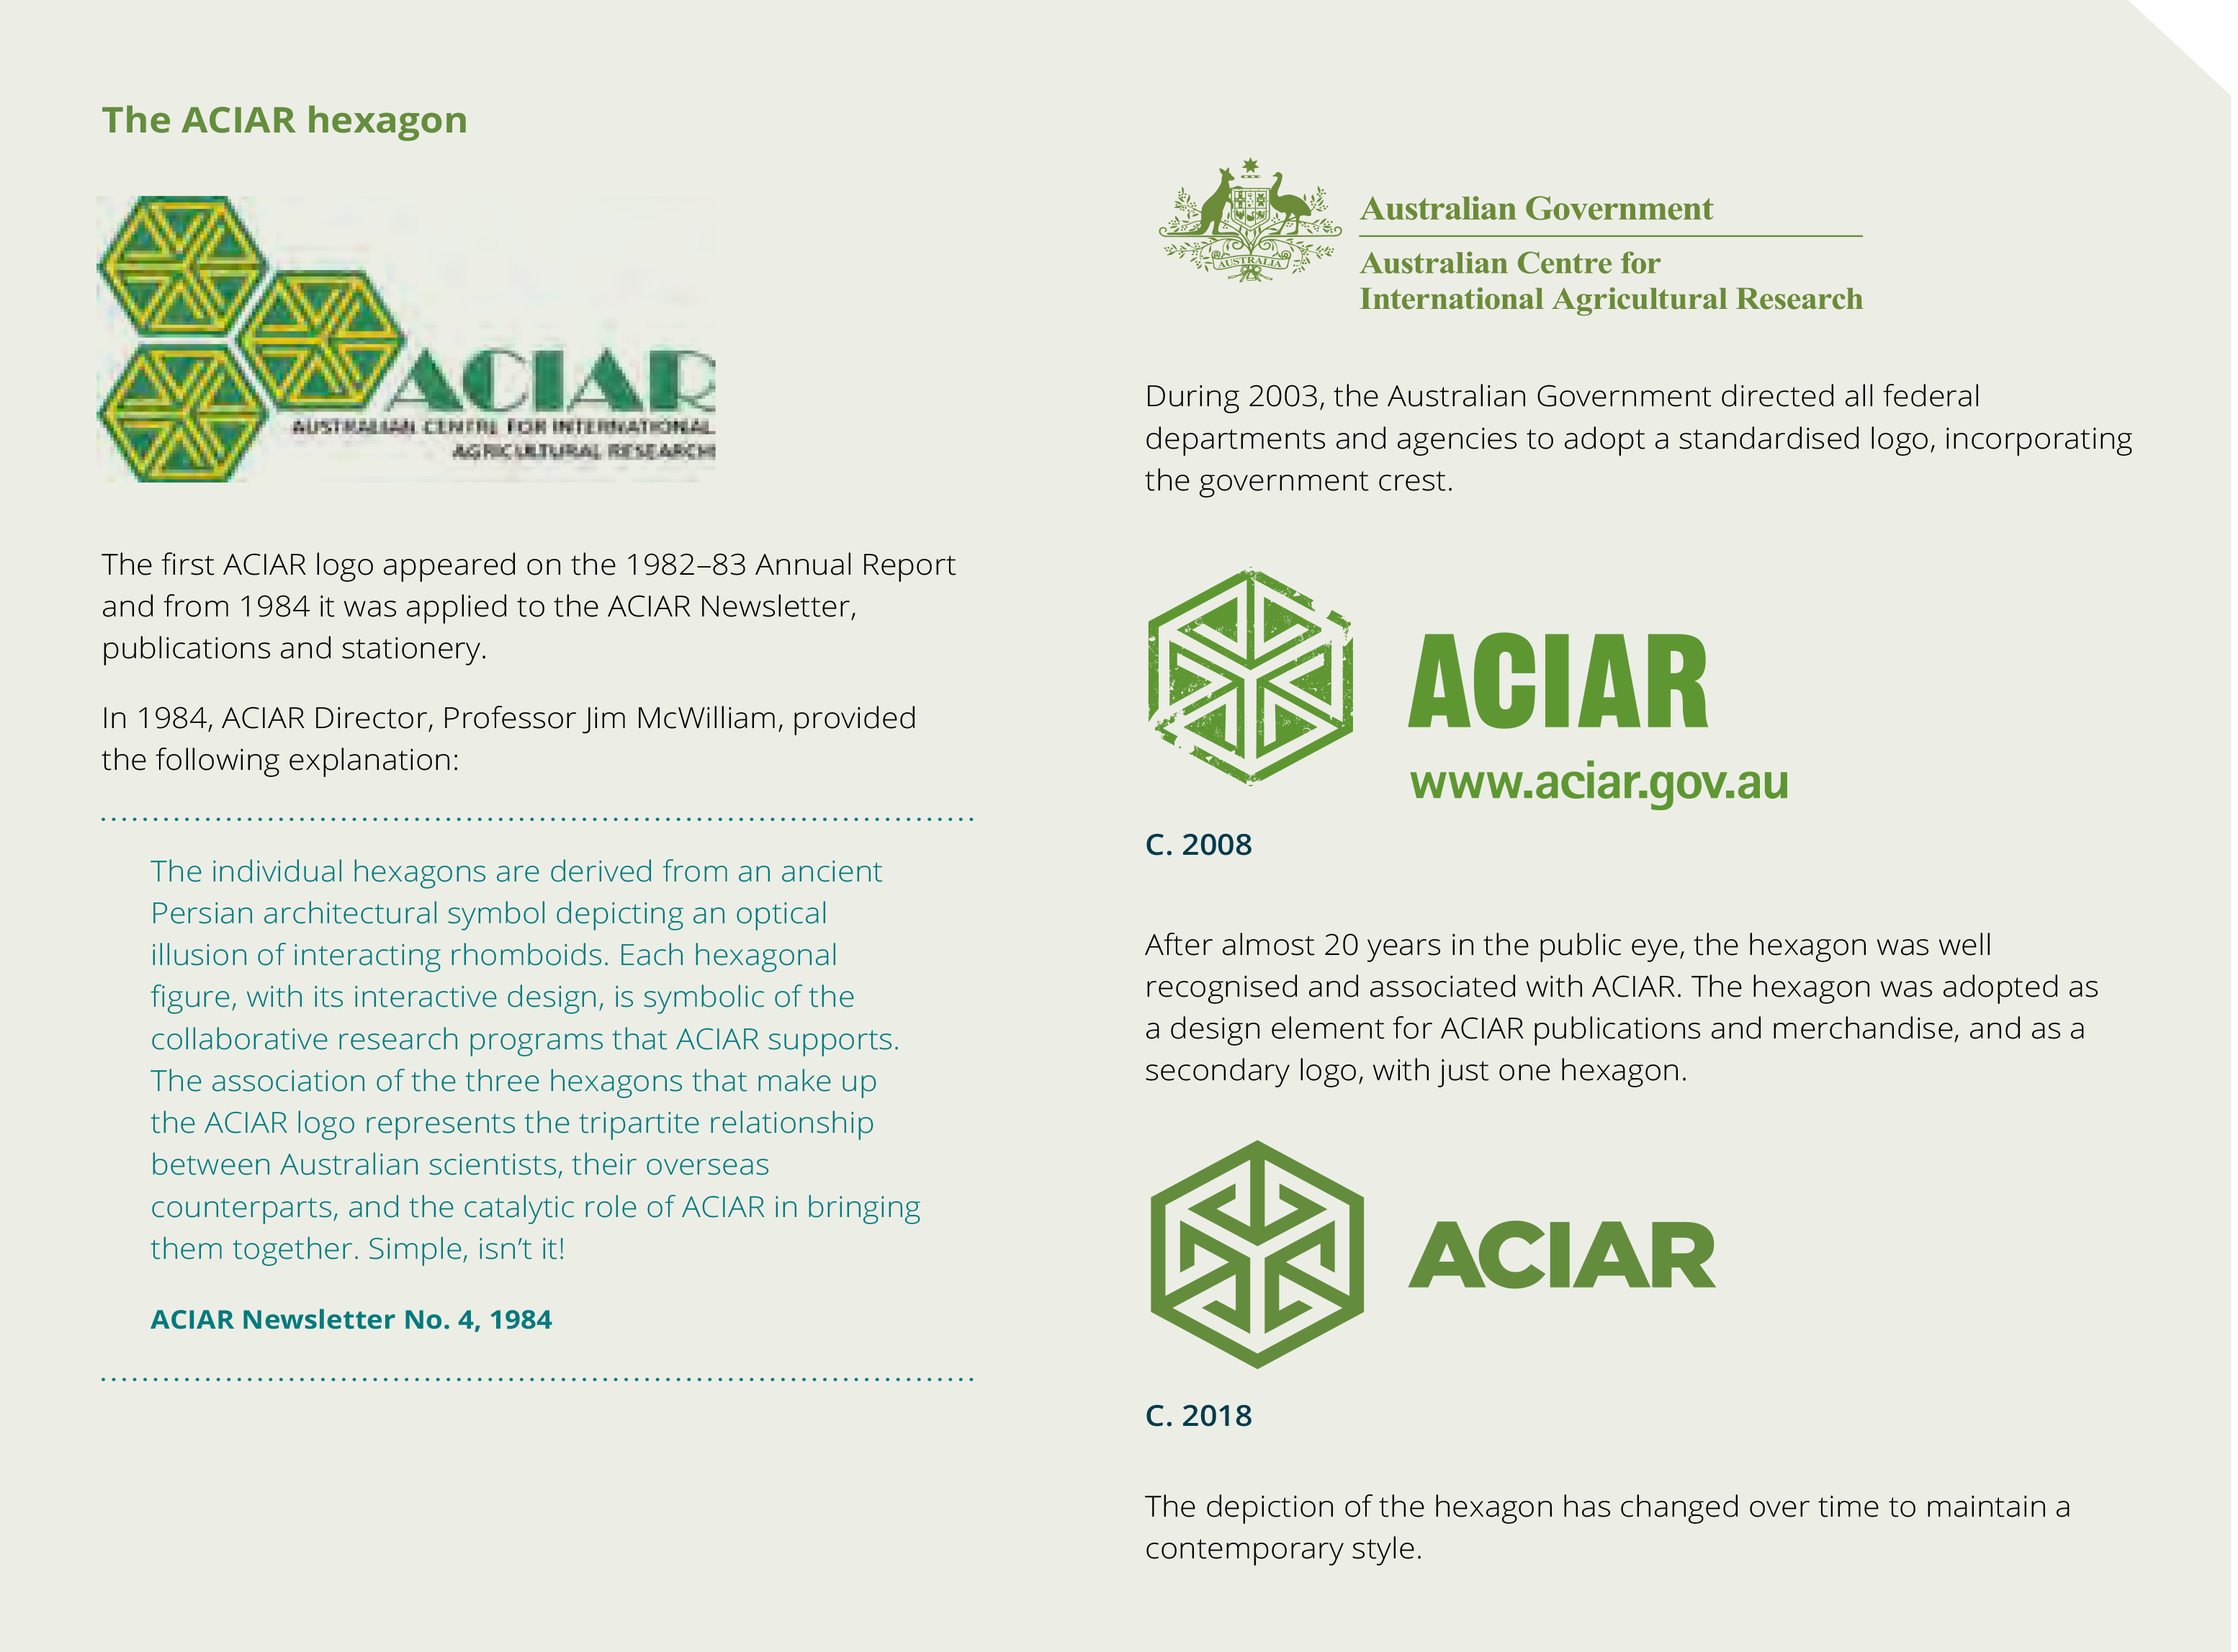 (left) the ACIAR original hexagon logo with three hexagons. (right) Australian government logo. ACIAR 2008 hexagon logo with one hexagon and a ACIAR website URL. ACIAR current logo with one hexagon and ACIAR next to it. 